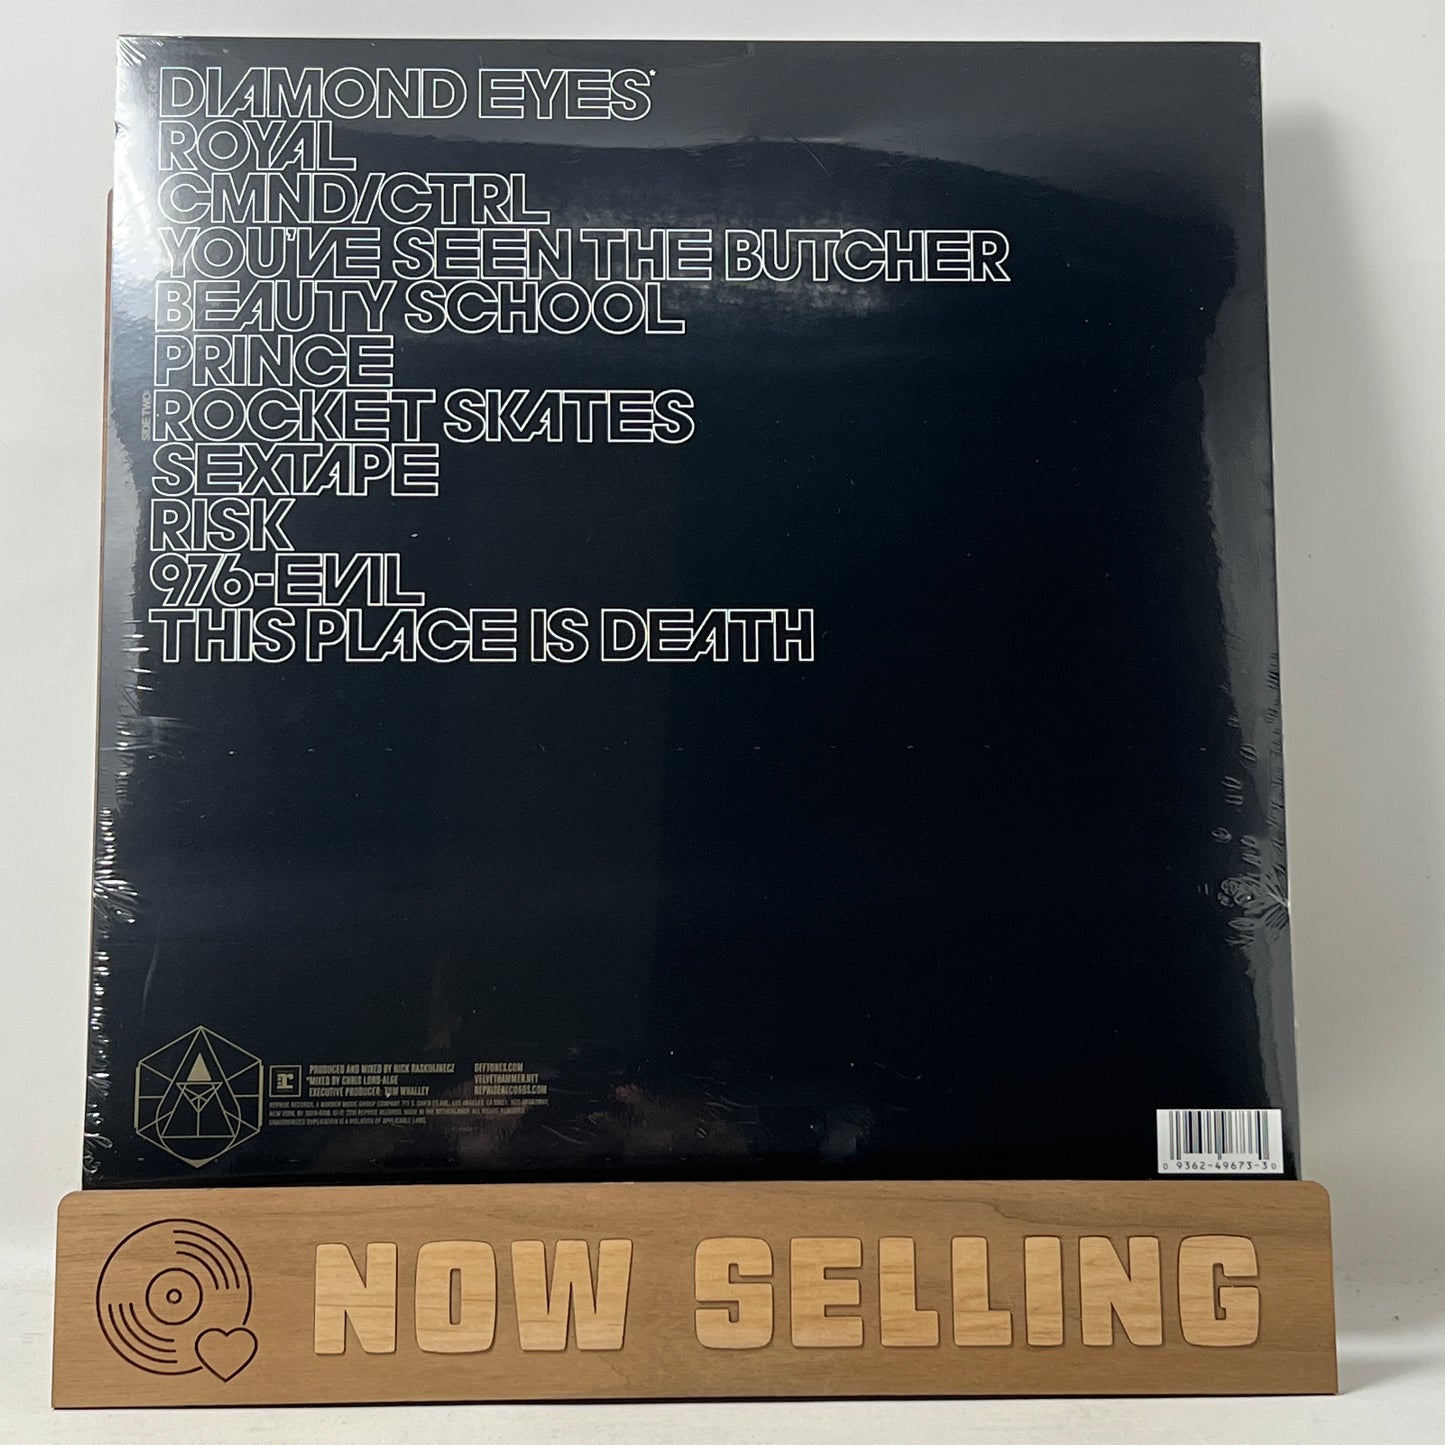 Deftones - Diamond Eyes Vinyl LP SEALED Black